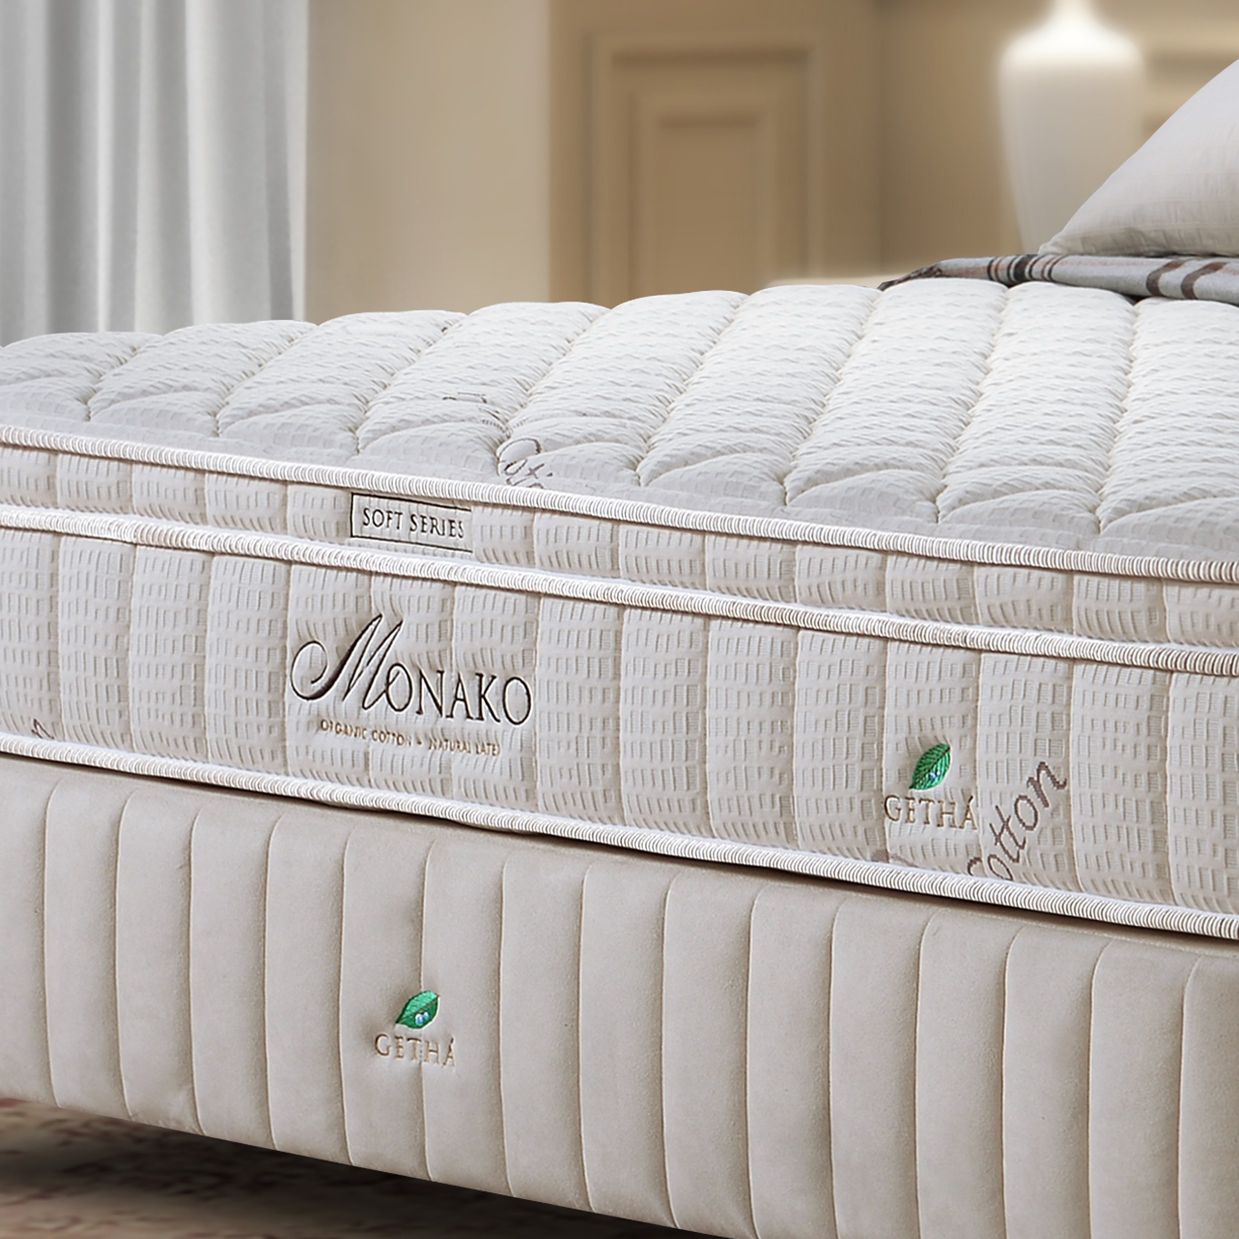 Monako Soft Bed Mattress